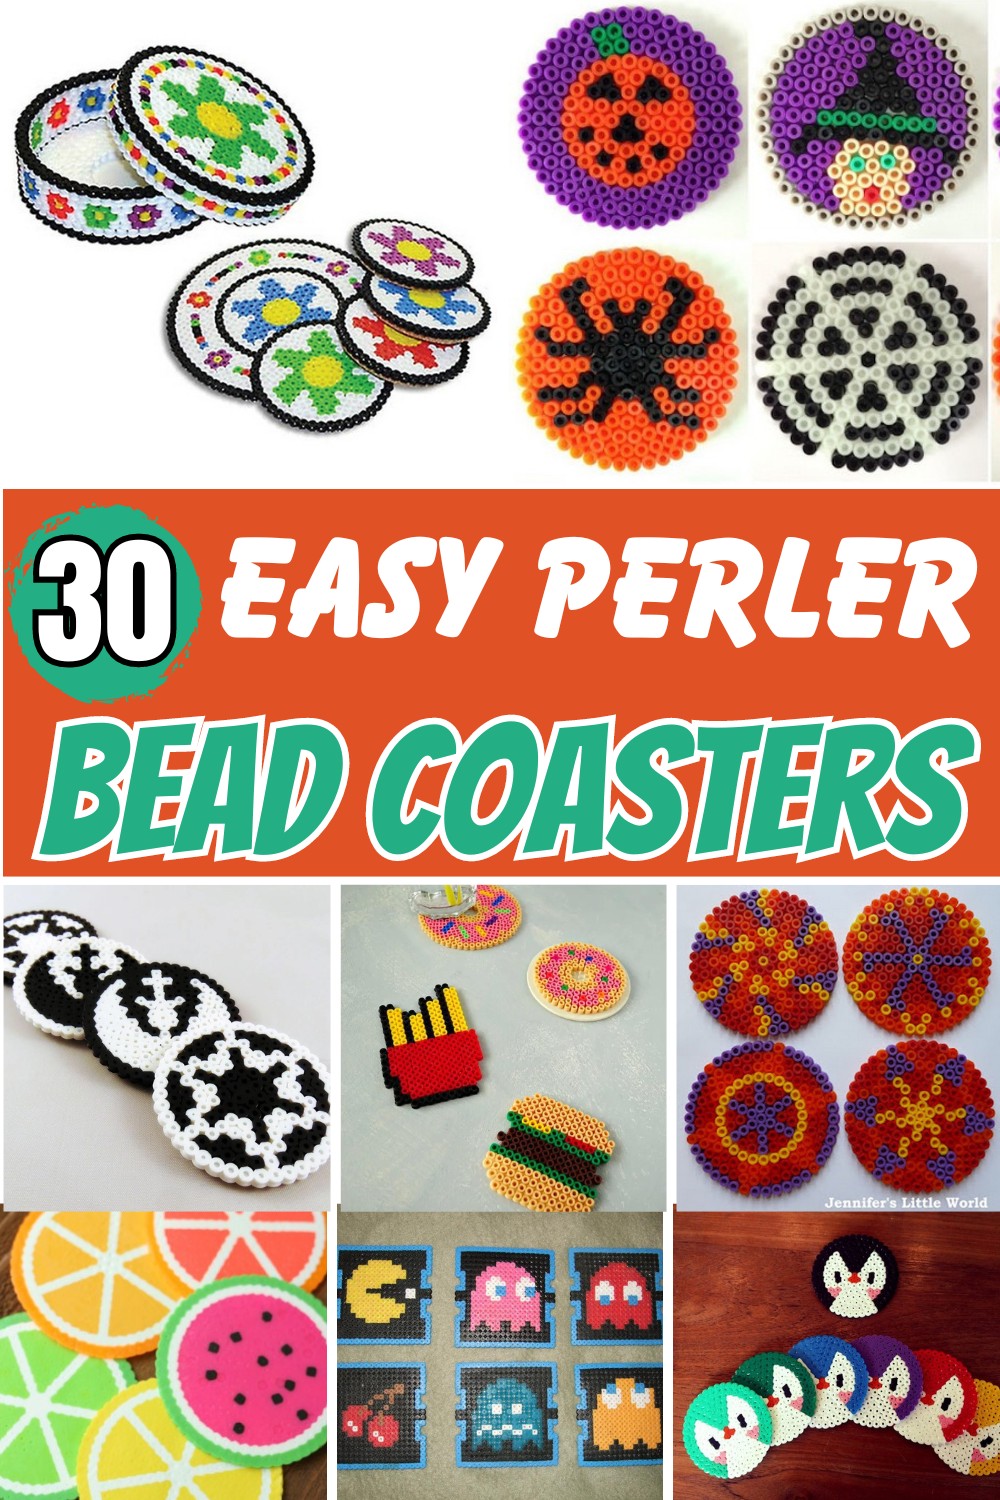 Easy Perler Bead Coasters